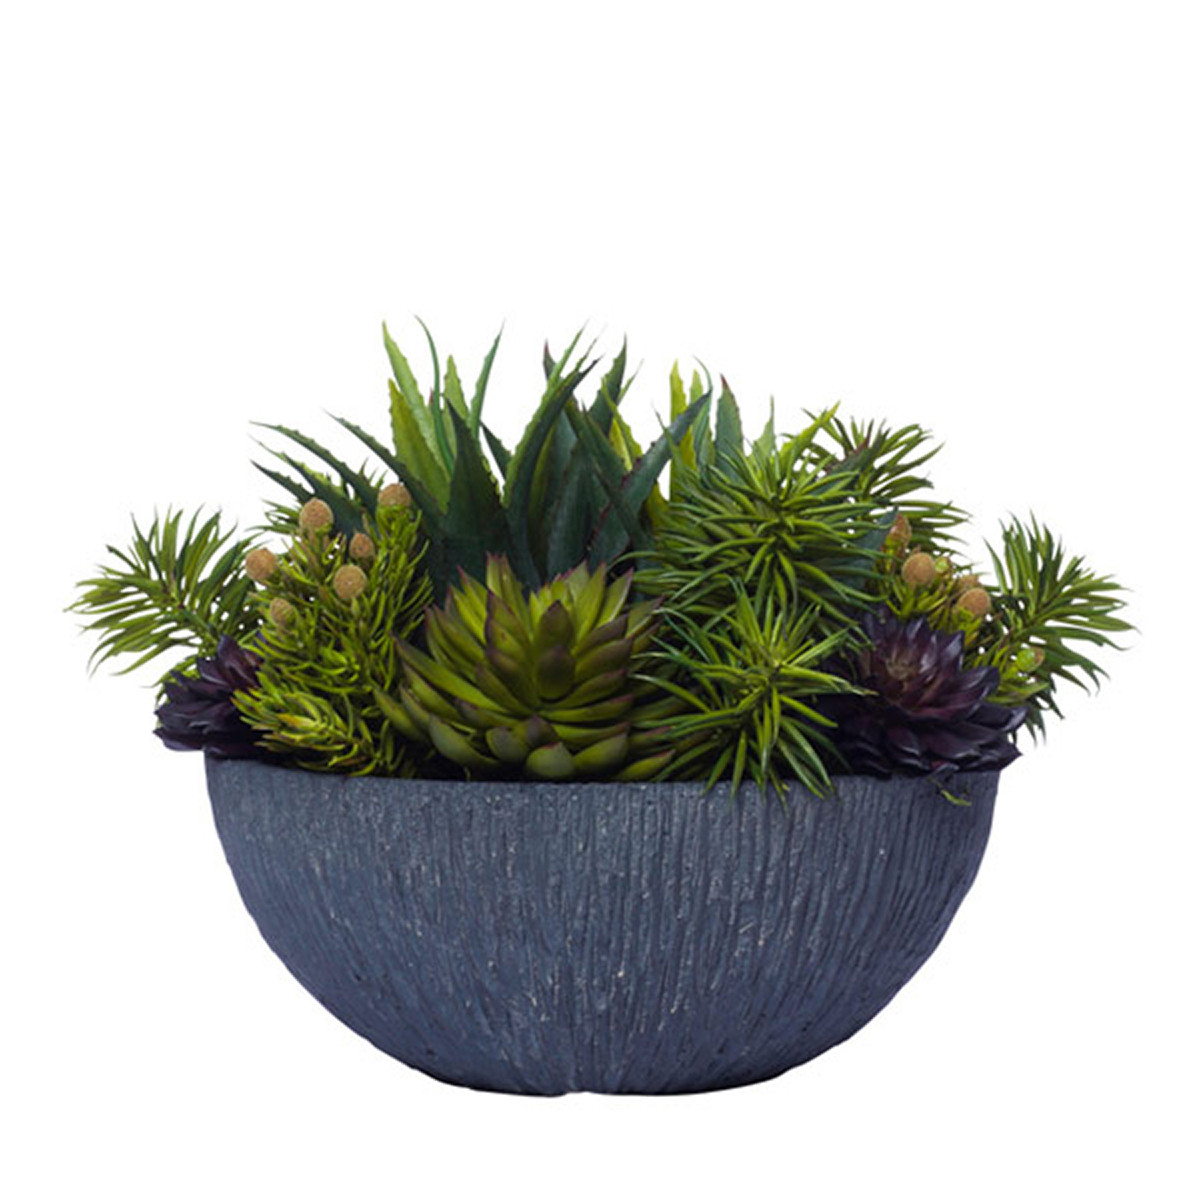 Mixed Succulents in Textured Black Bowl | CUDESSO.com